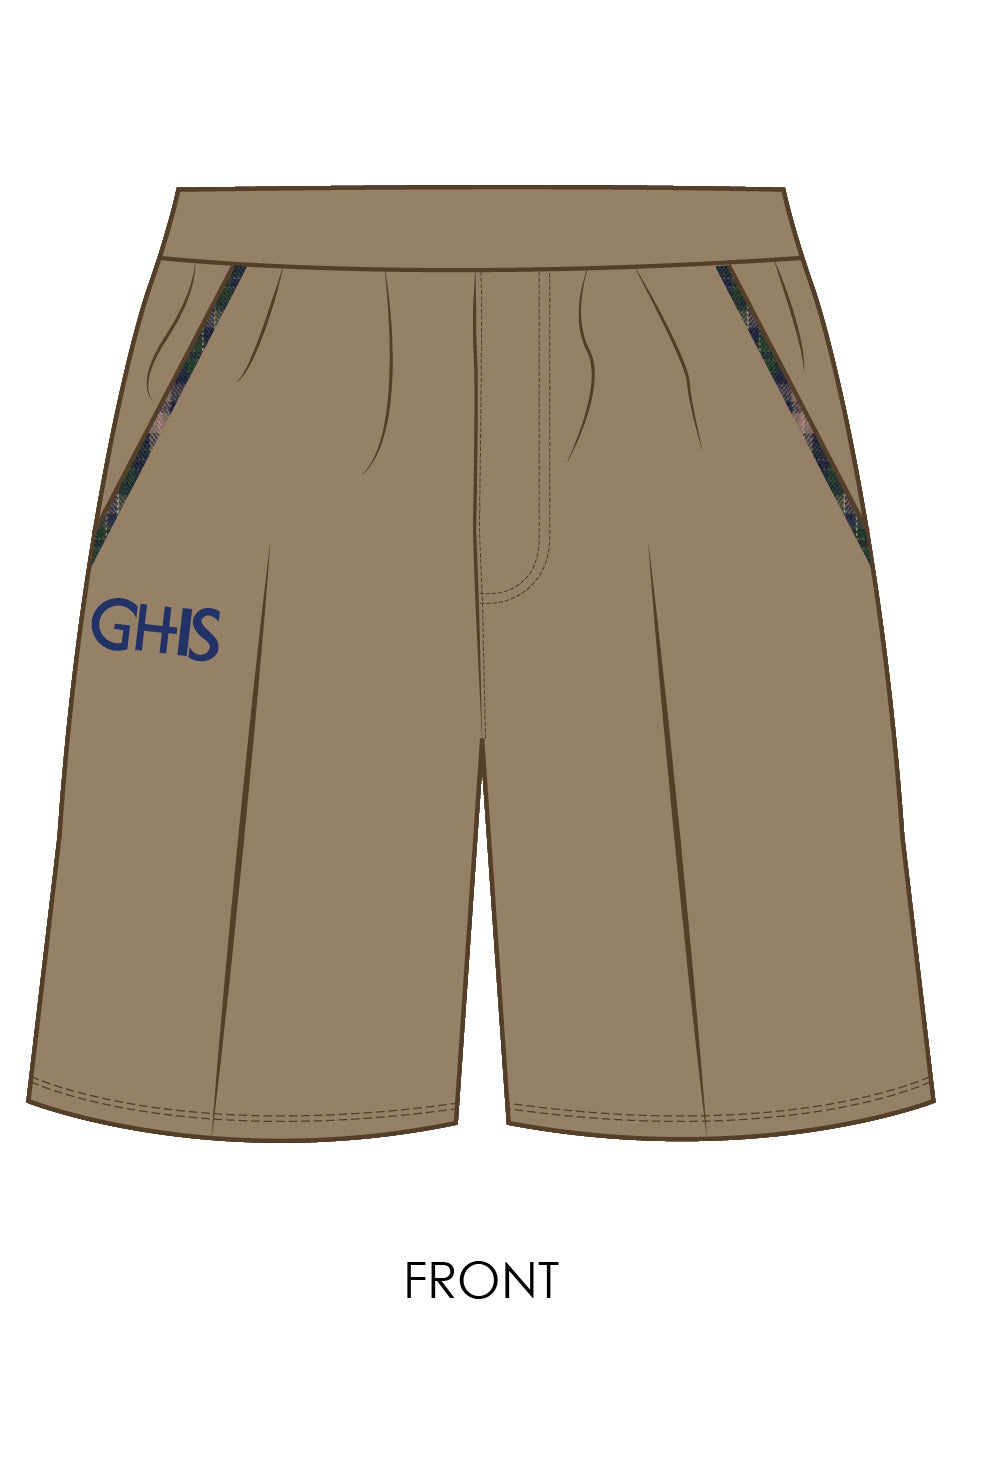 GHIS Shorts (KG - Grades)